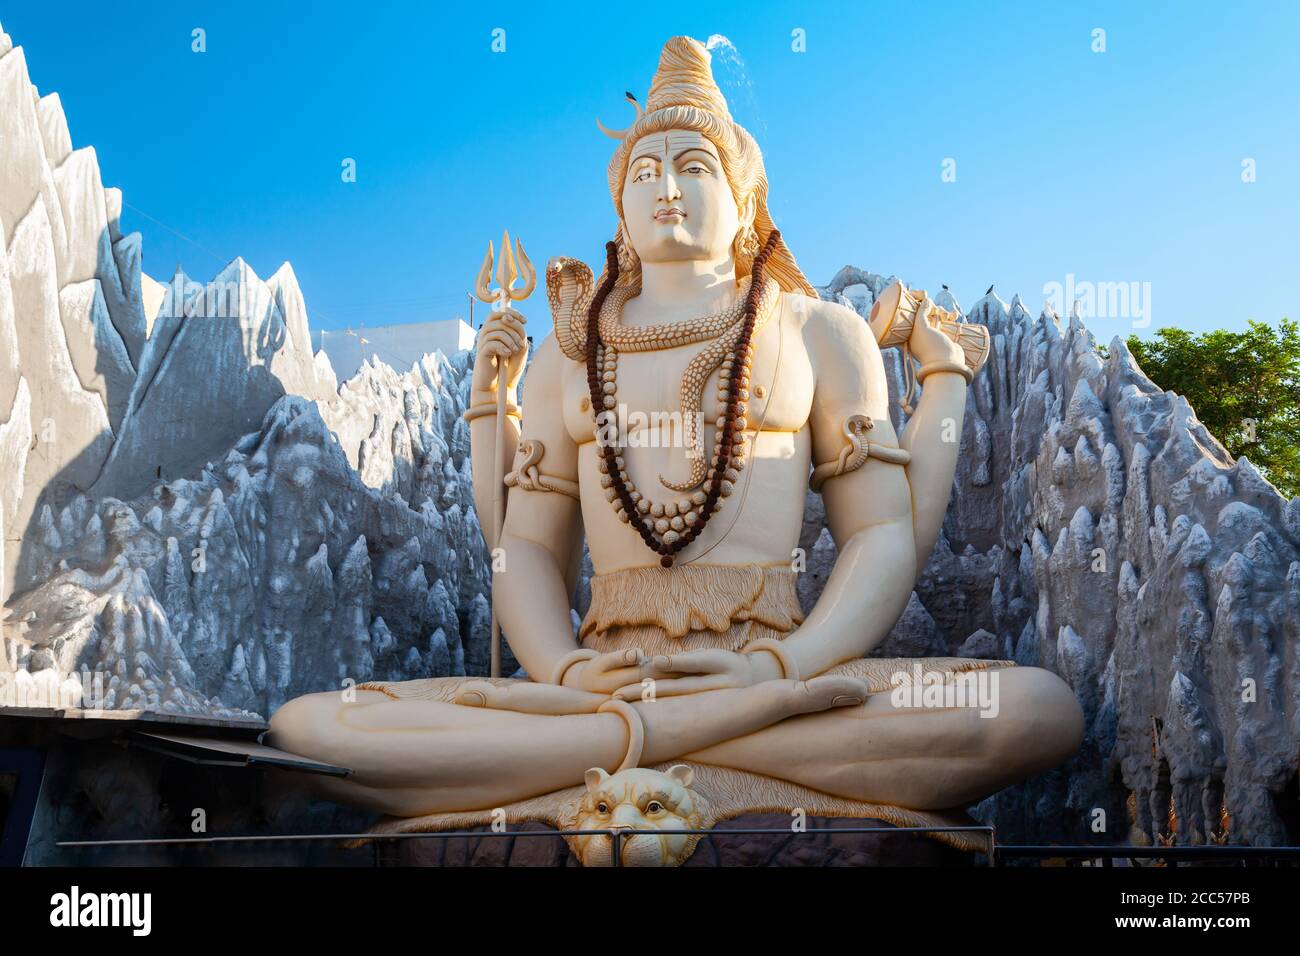 Lord Shiva statue at the Shivoham Shiva Temple, located in Bangalore city in Karnataka, India Stock Photo